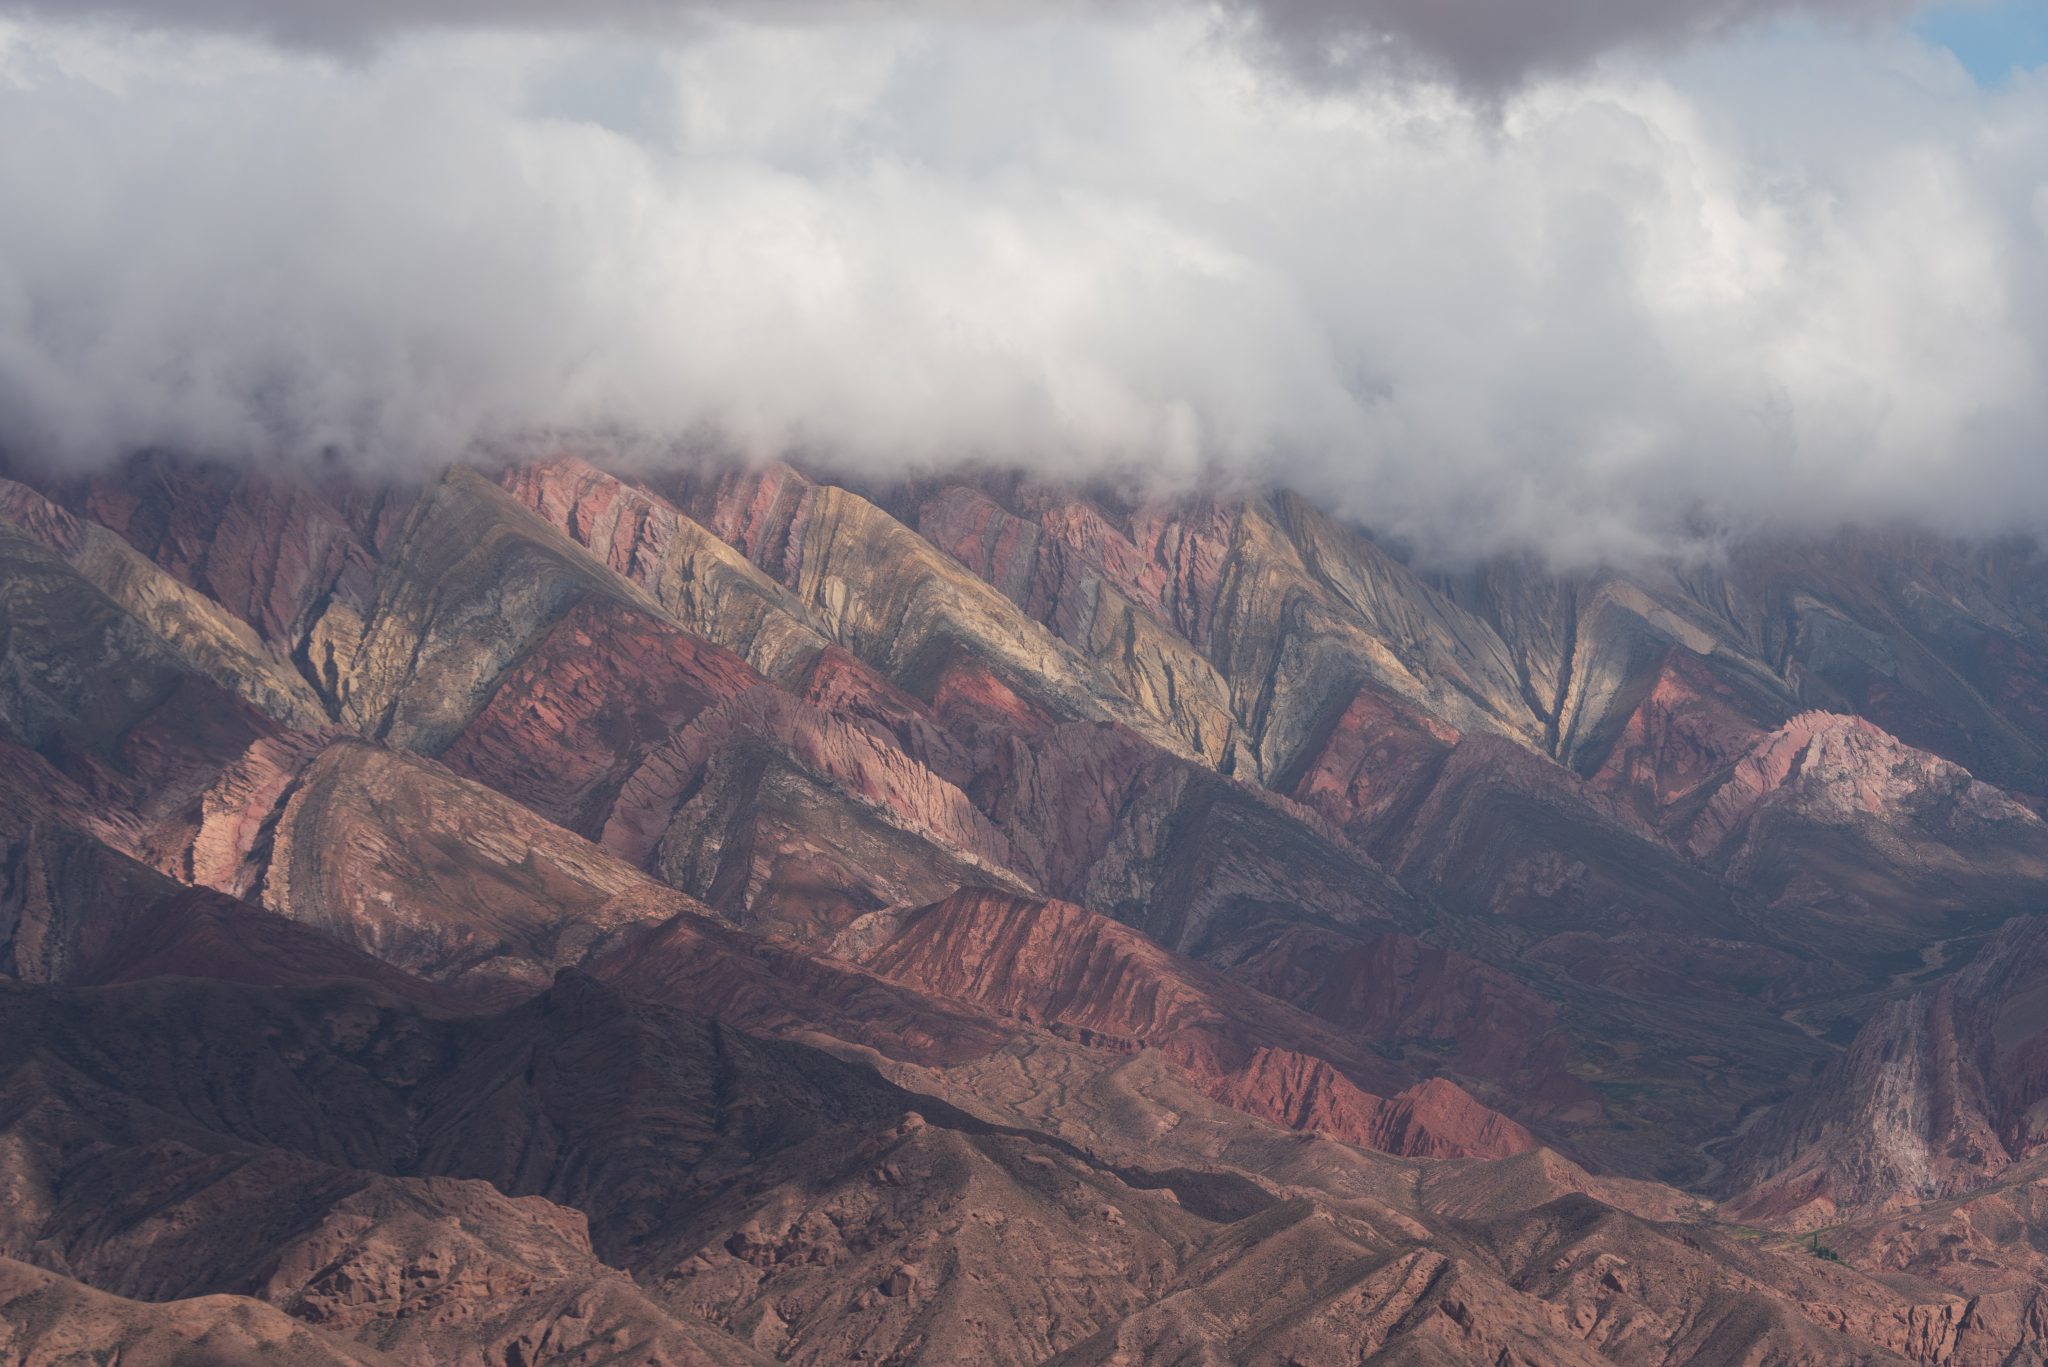 View of the rainbow colored hills in Quebrada de Humahuaca, Argentina